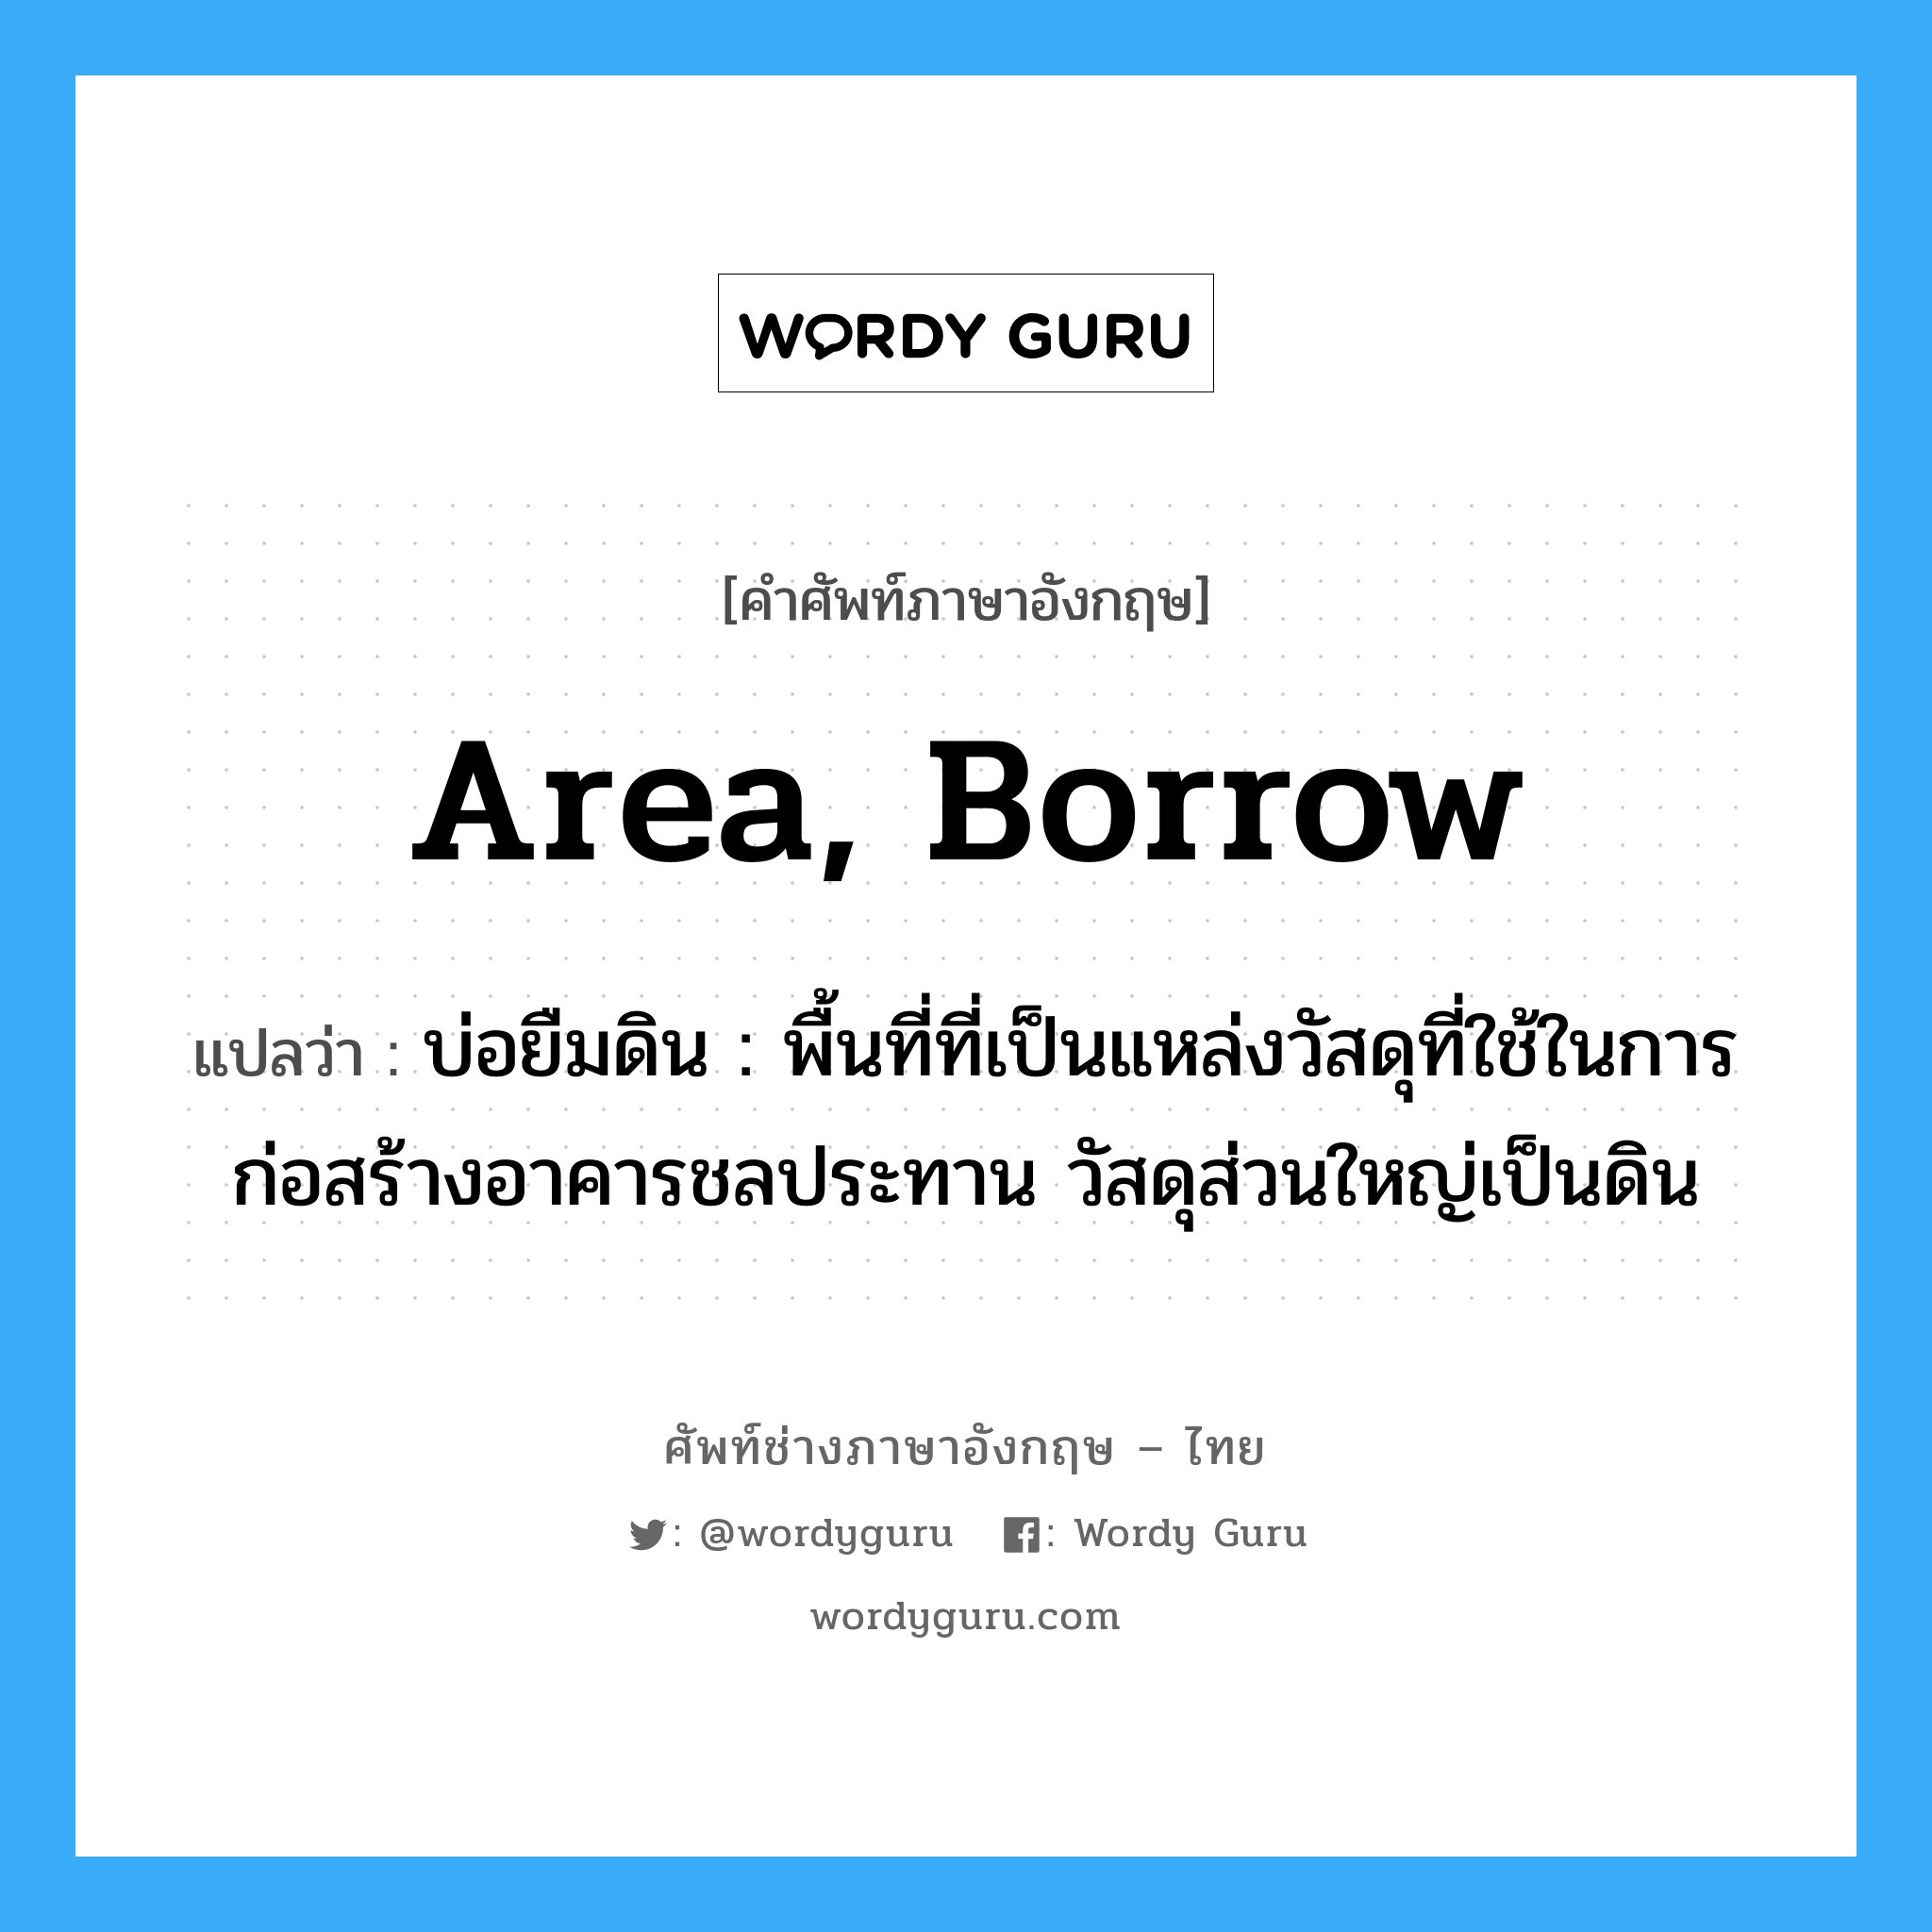 area, borrow แปลว่า?, คำศัพท์ช่างภาษาอังกฤษ - ไทย area, borrow คำศัพท์ภาษาอังกฤษ area, borrow แปลว่า บ่อยืมดิน : พื้นที่ที่เป็นแหล่งวัสดุที่ใช้ในการก่อสร้างอาคารชลประทาน วัสดุส่วนใหญ่เป็นดิน